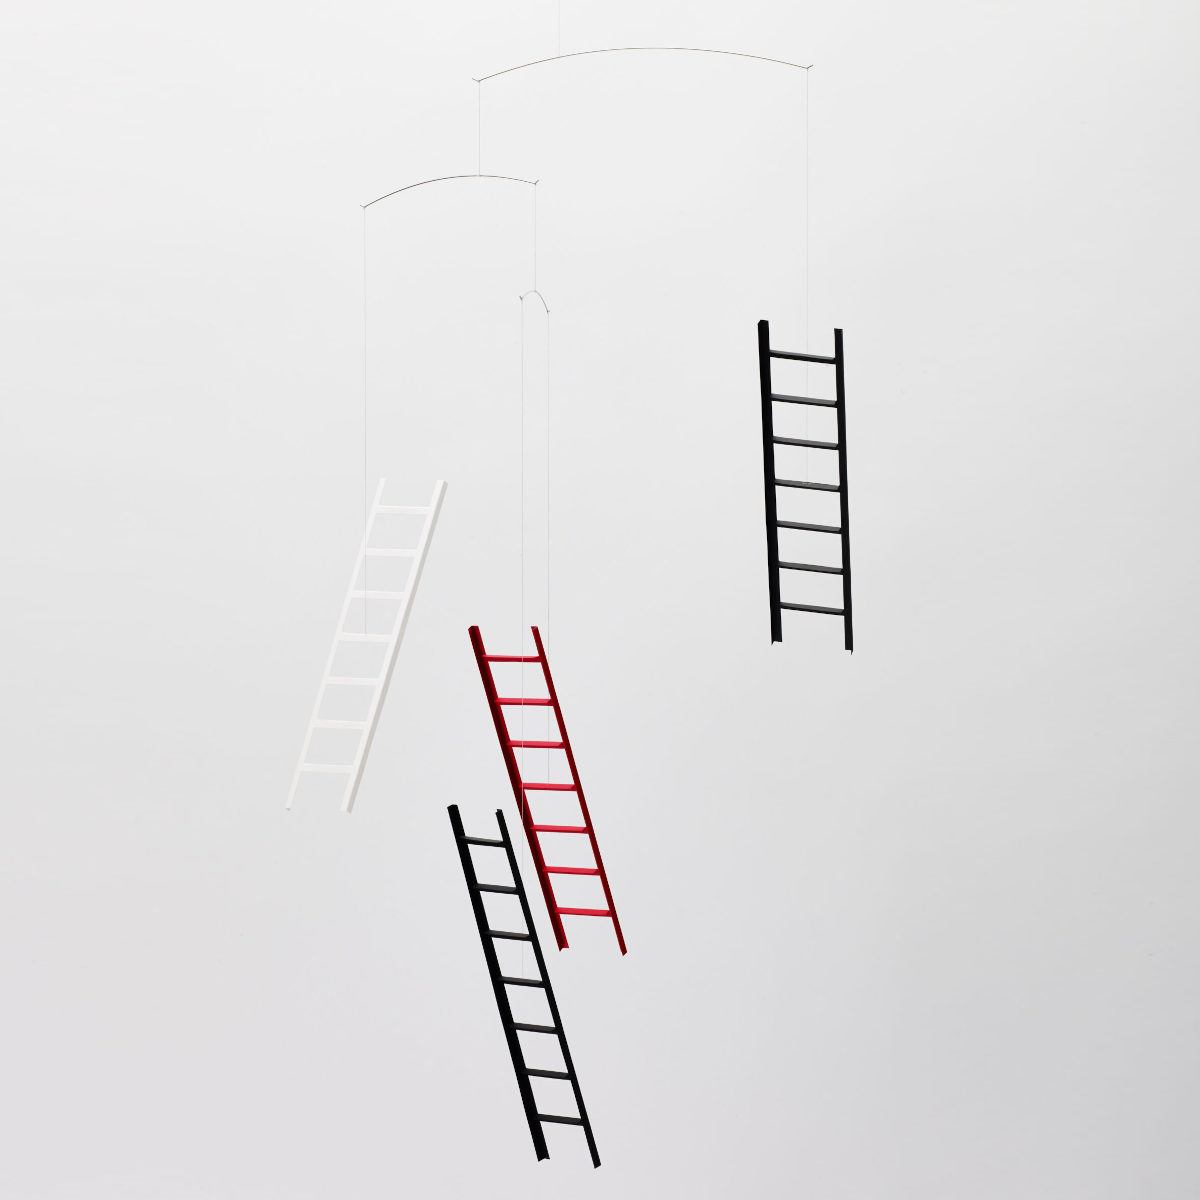 Decorative Hanging Mobile 7 Steps 4 Ladders Made of Cardboard